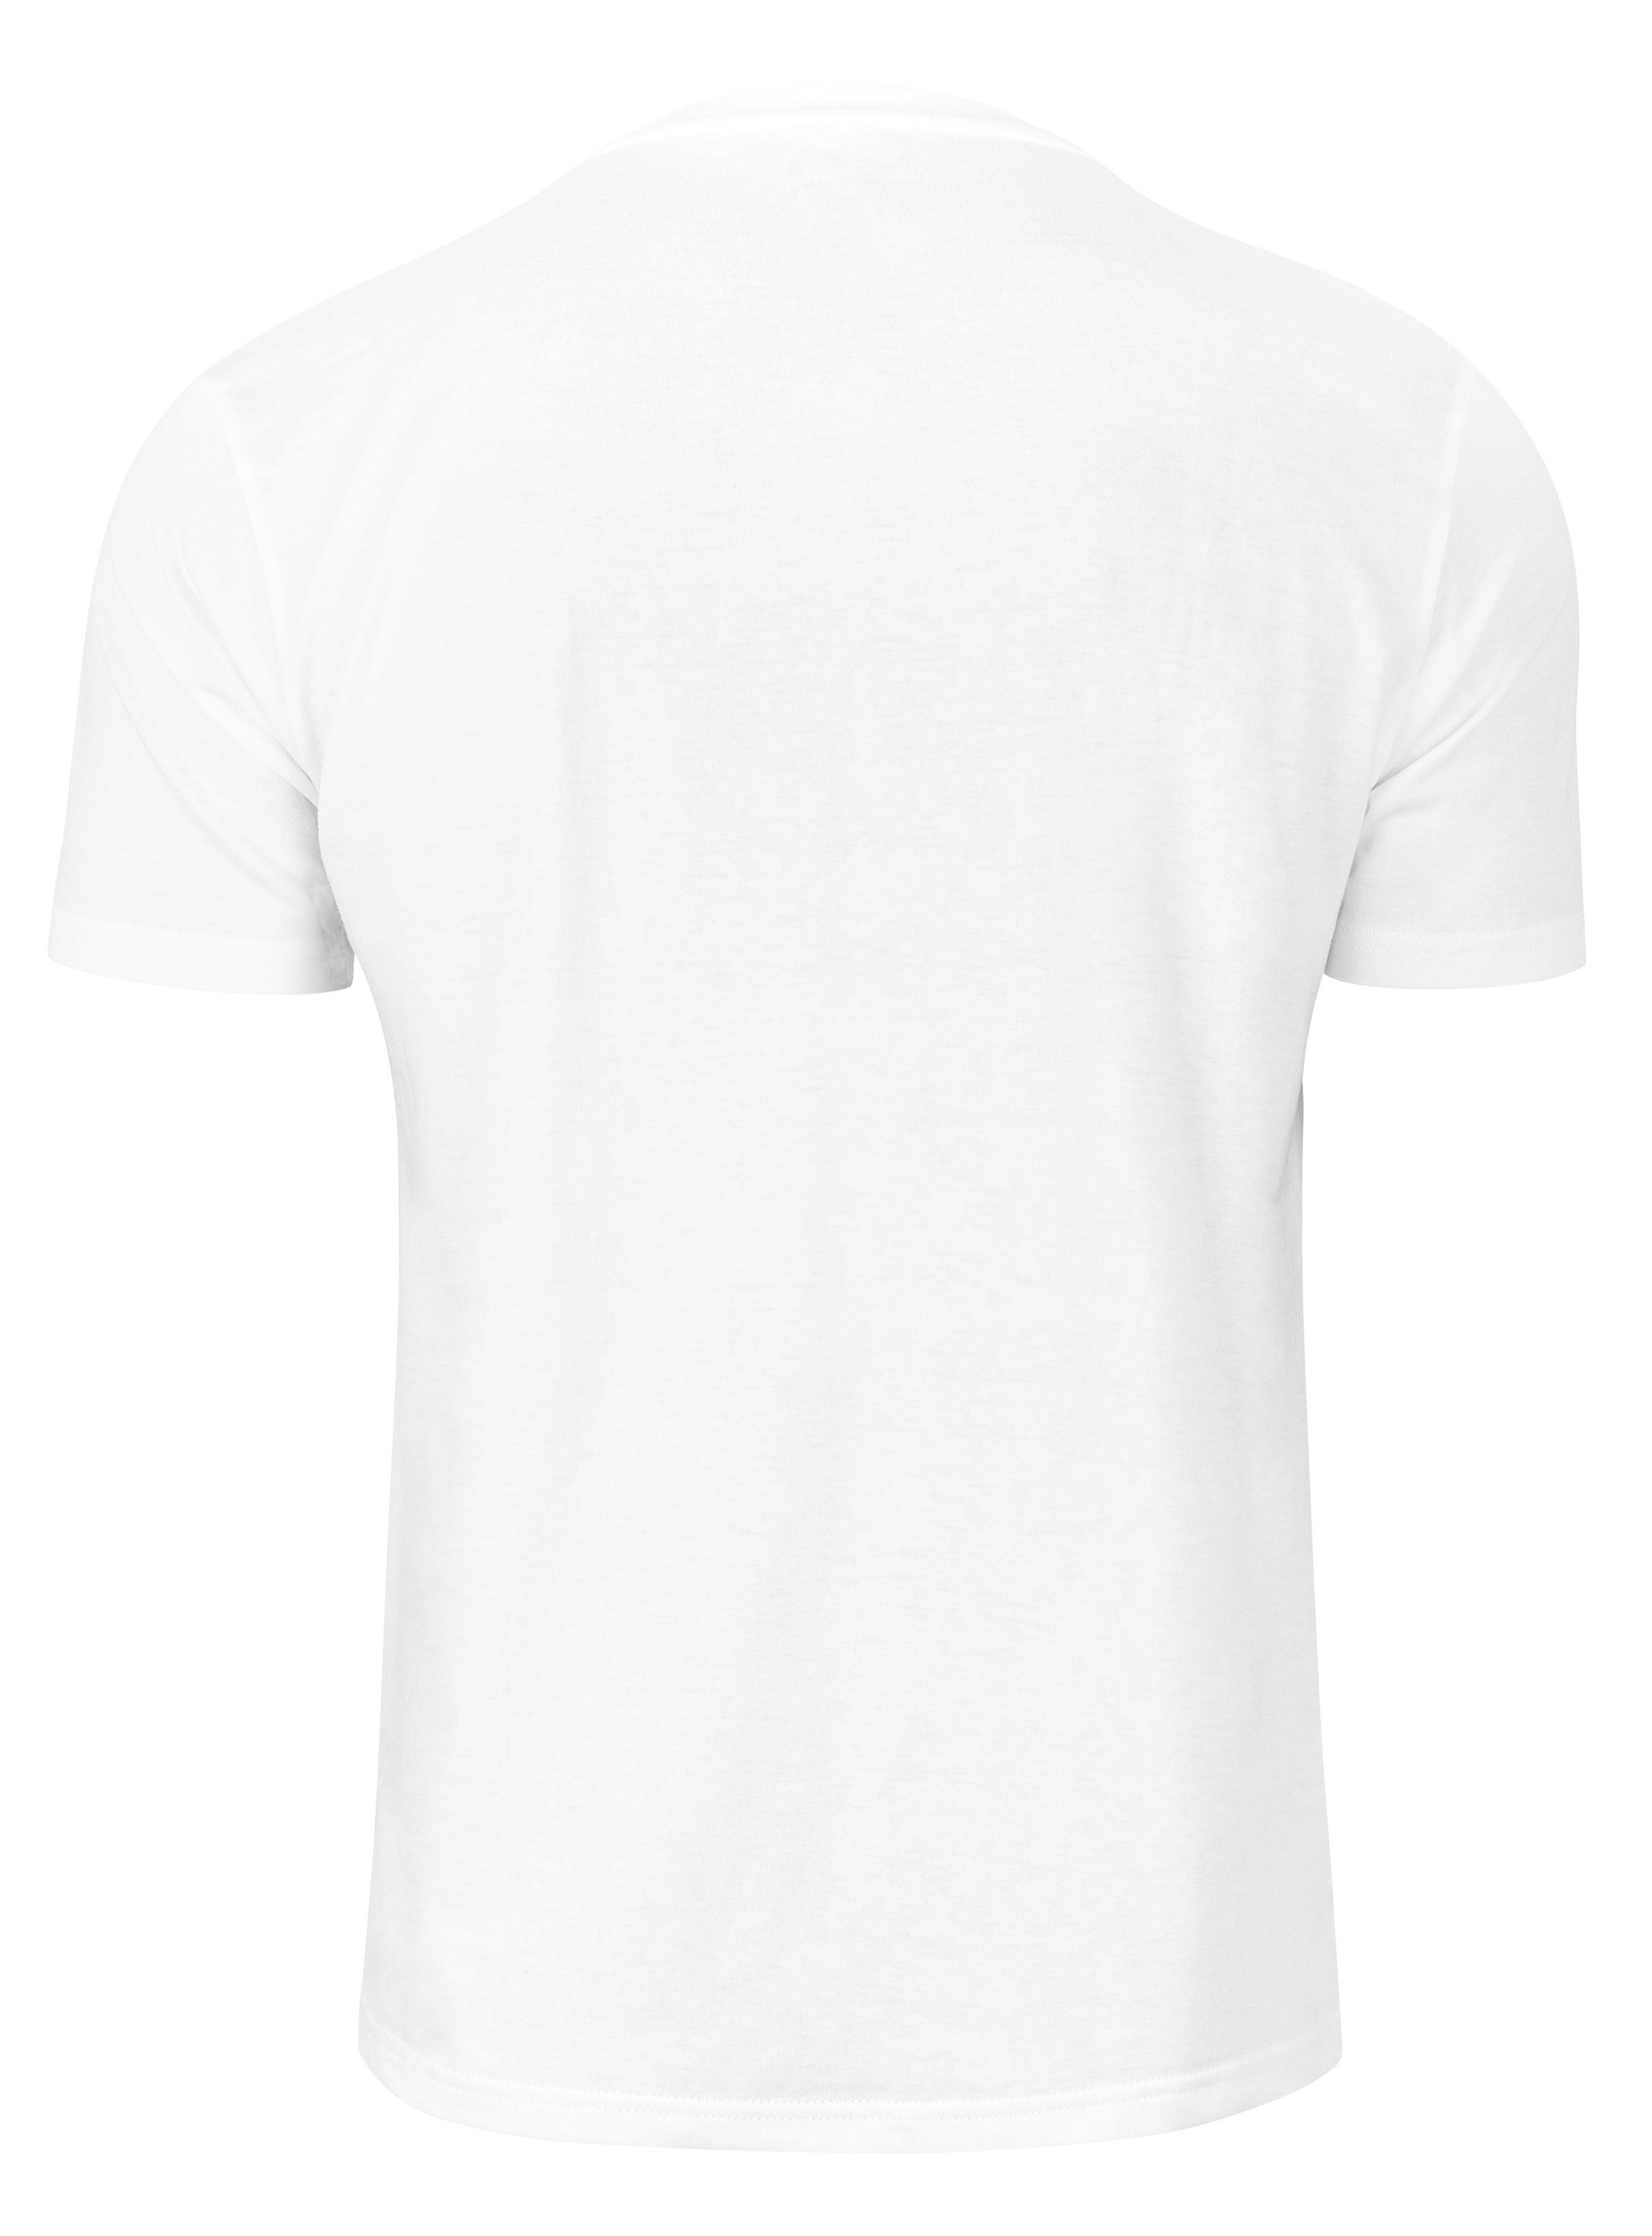 Cotton Prime® T-Shirt Fußball weiss